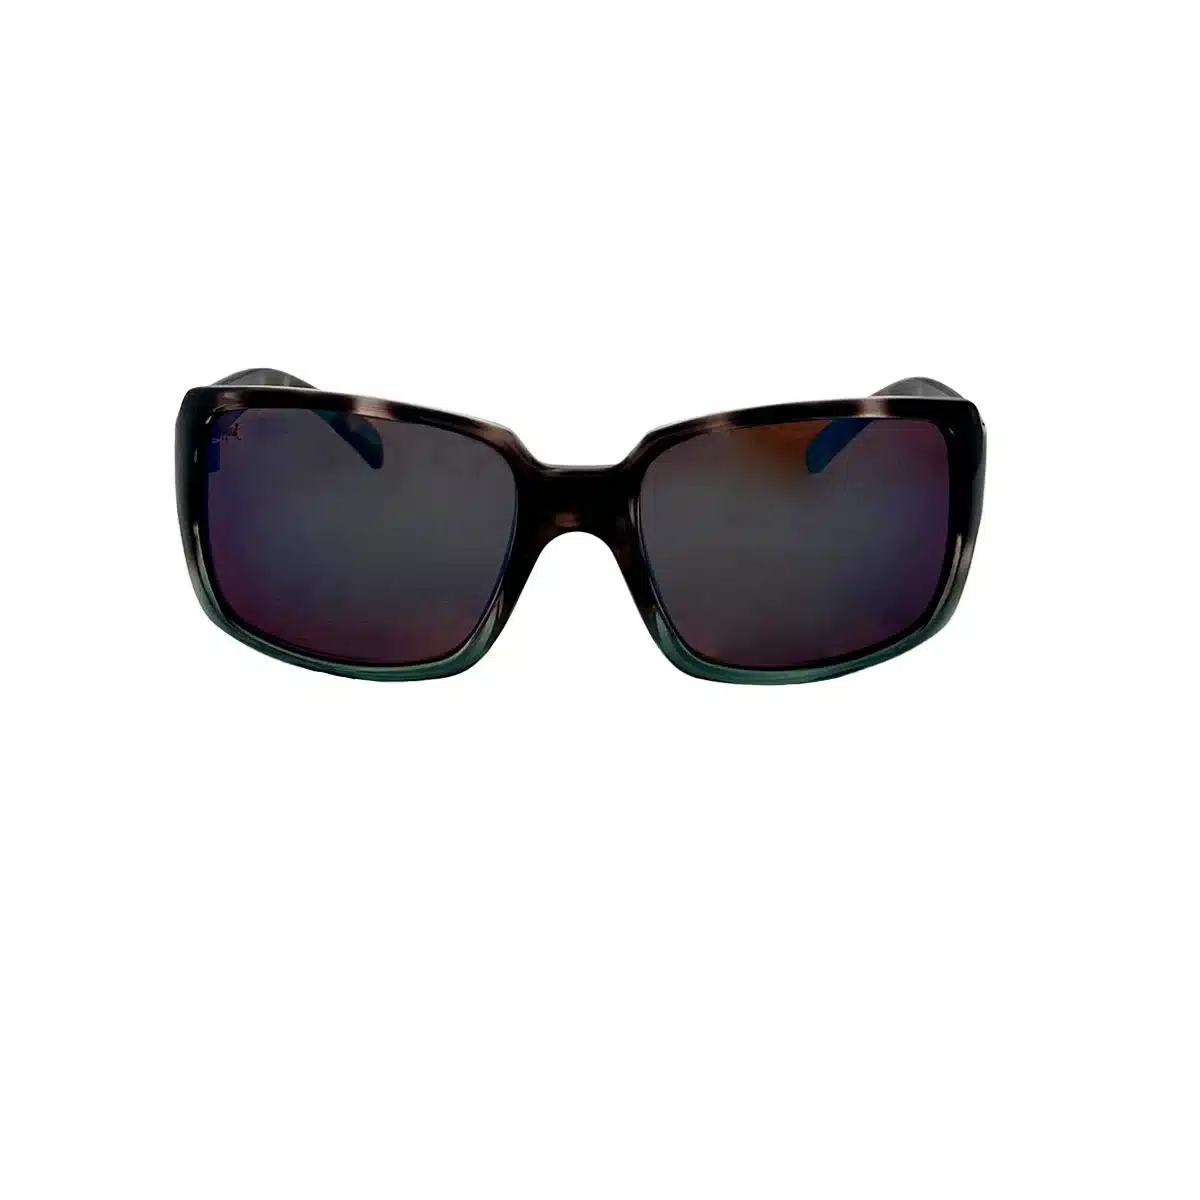 Cuda polarized sunglasses by Hook Optics with copper lenses cobalt mirror | Hook Sunglasses